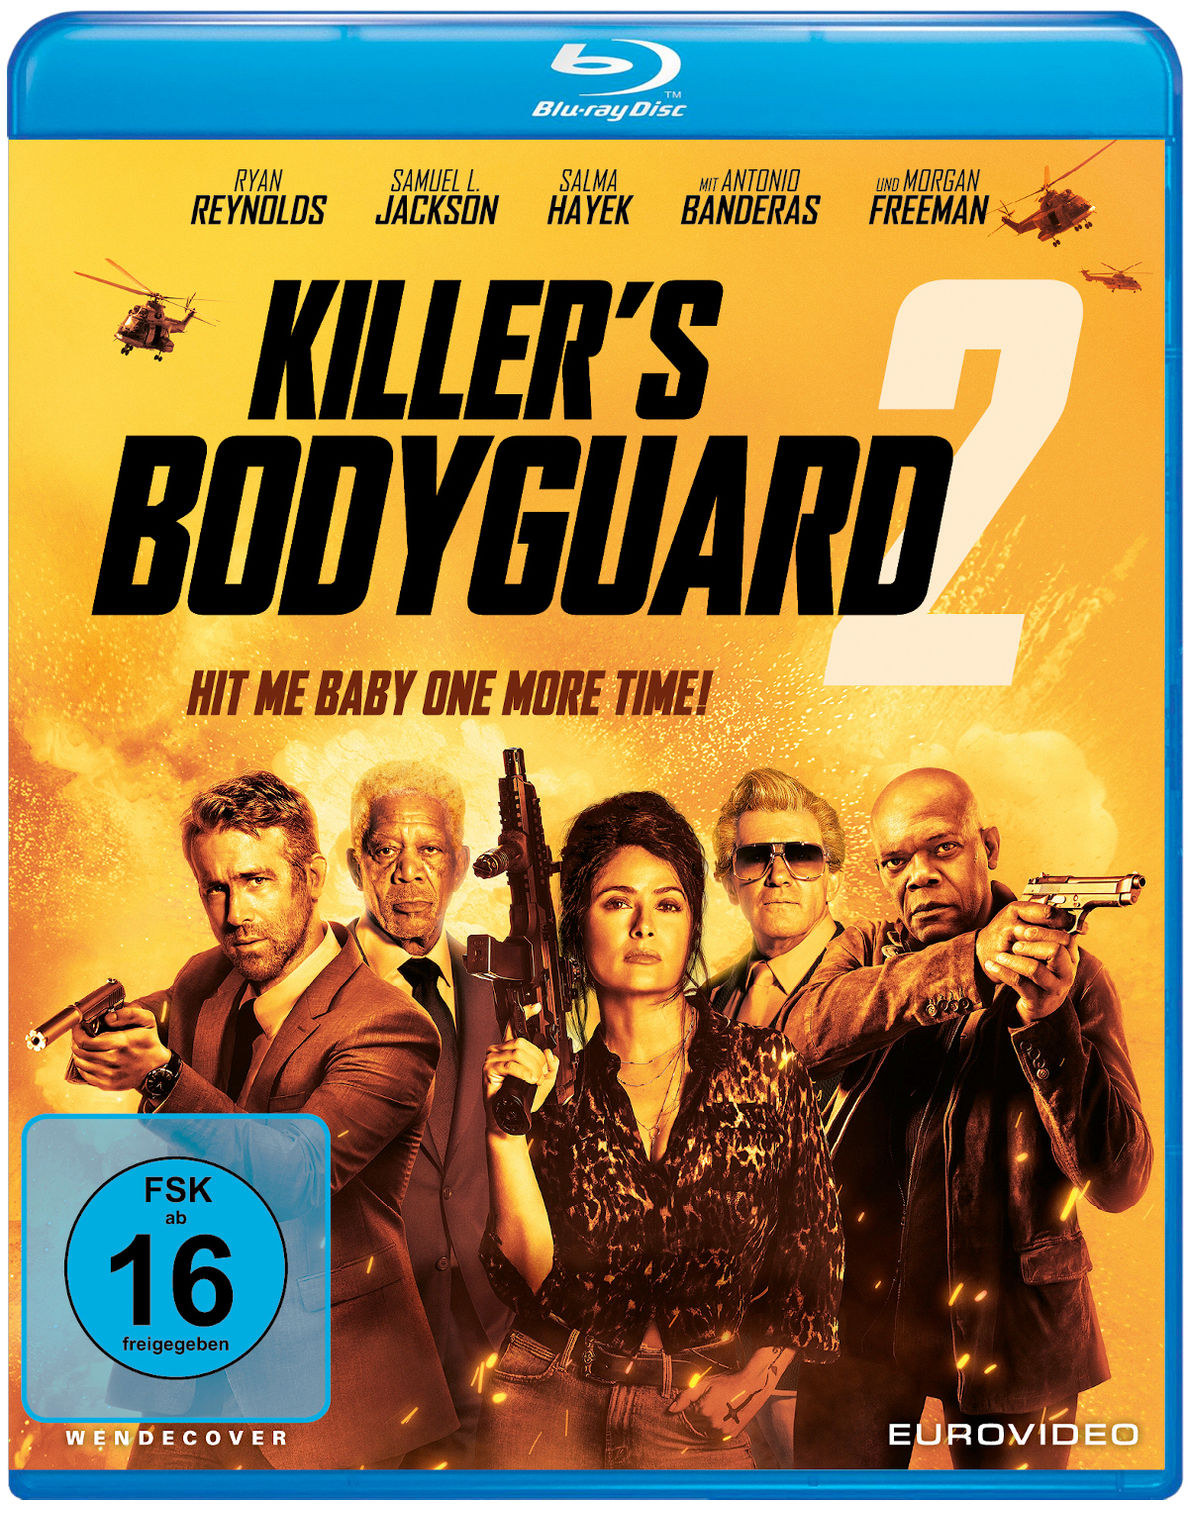 Killer's Bodyguard 2 Blu-ray jetzt im Weltbild.de Shop bestellen